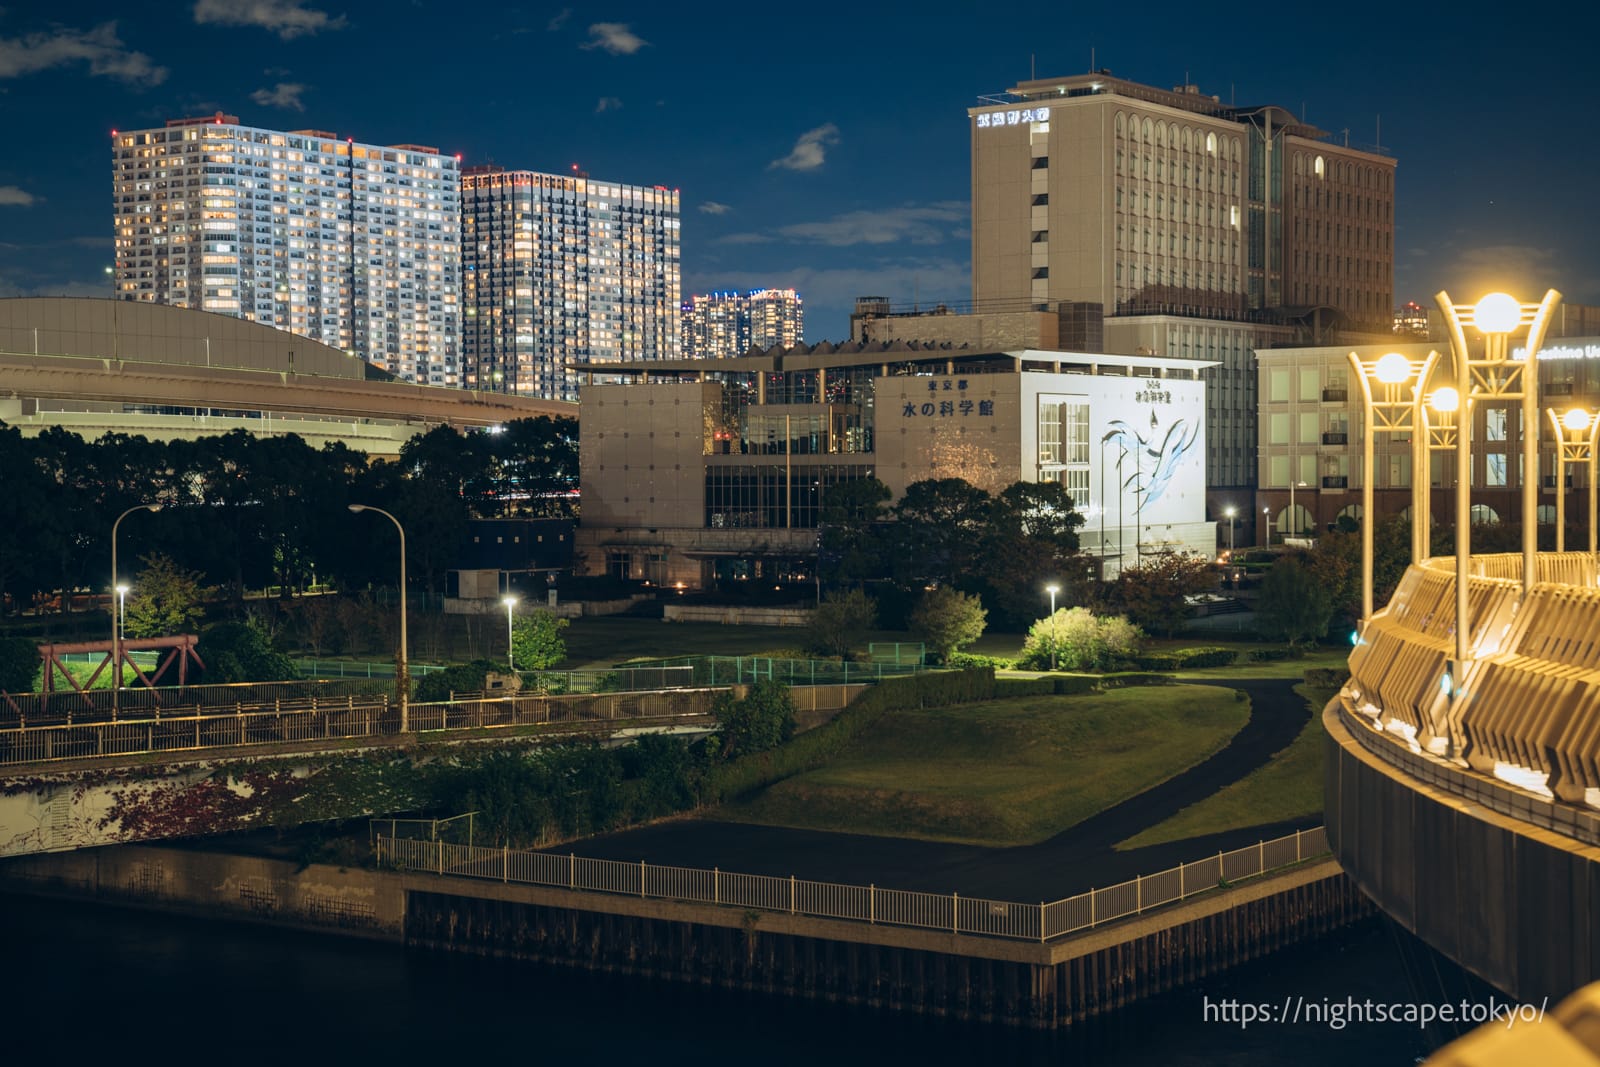 Tower condominium complexes in the direction of Toyosu.